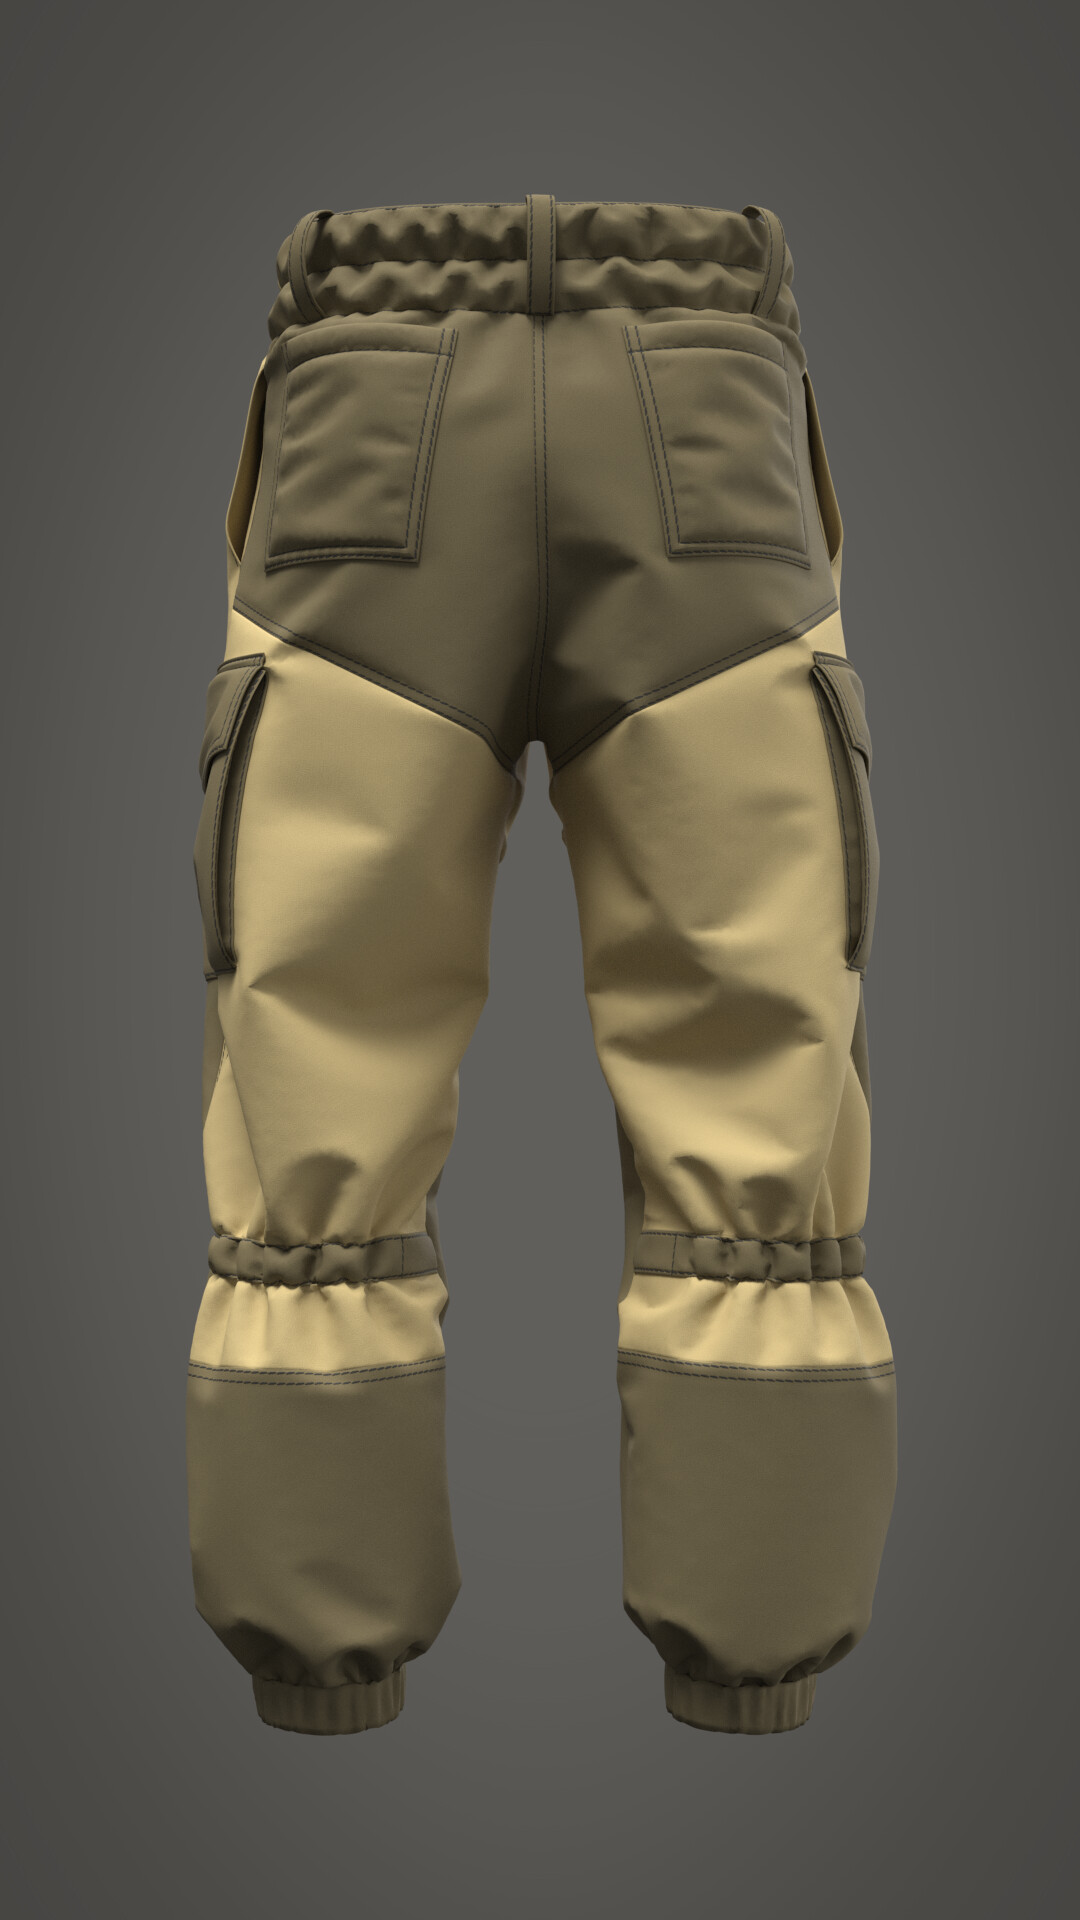 ArtStation - Military pants 